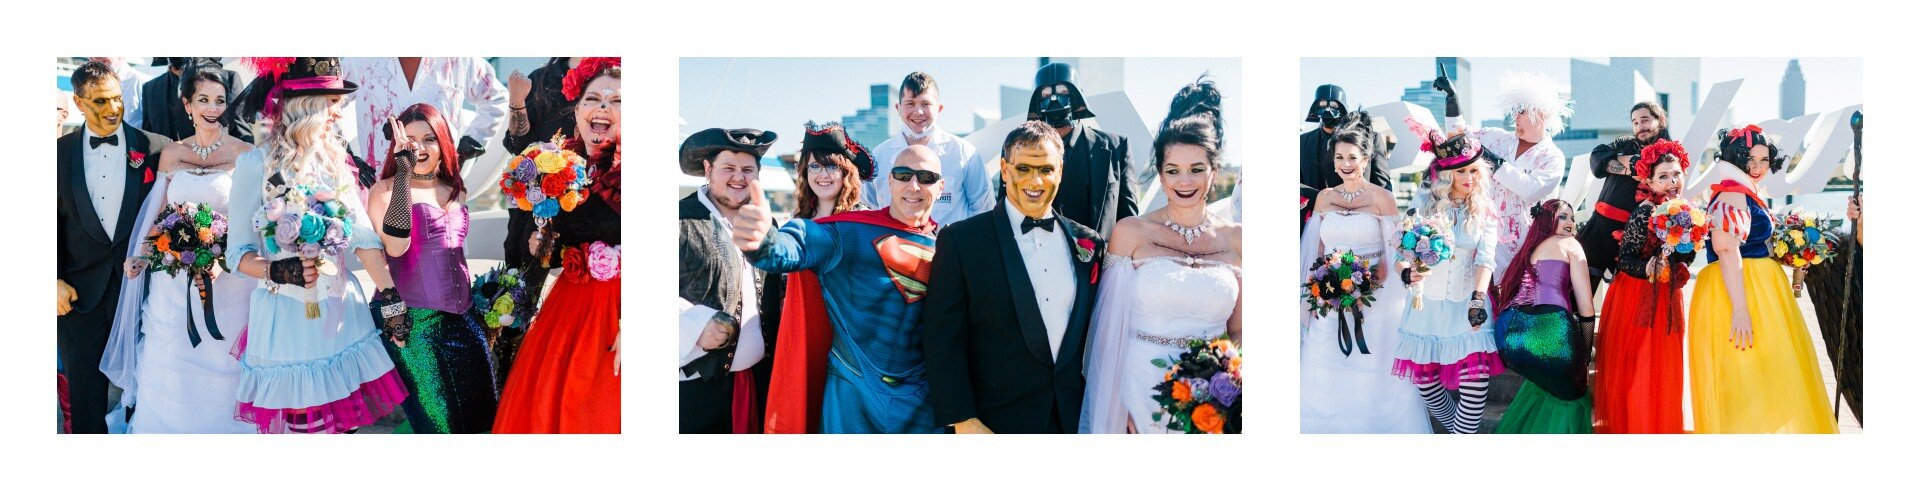 Halloween Wedding in Cleveland Photographer 1 17.jpg